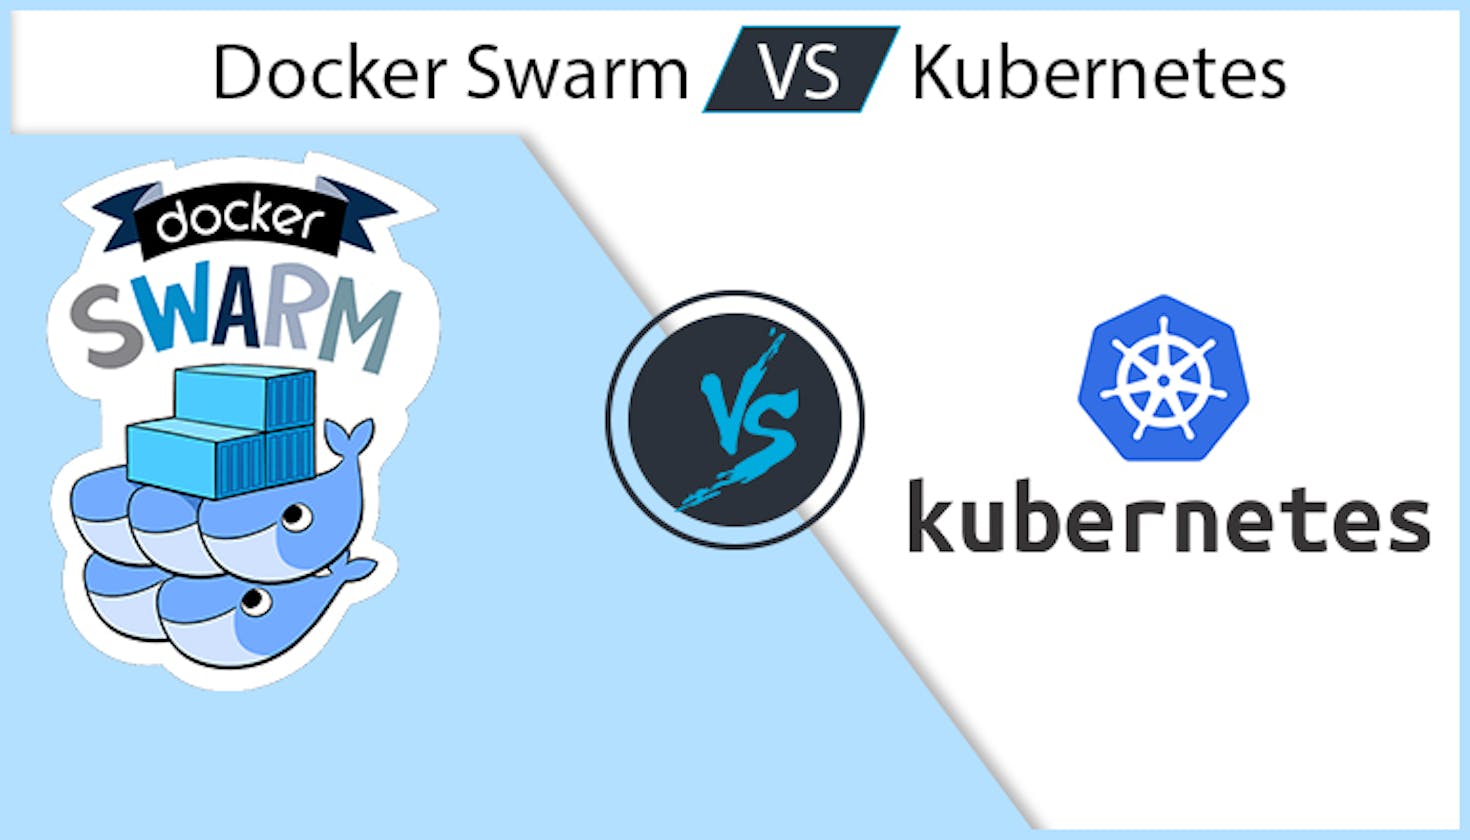 Docker Swarm V/S Kubernetes